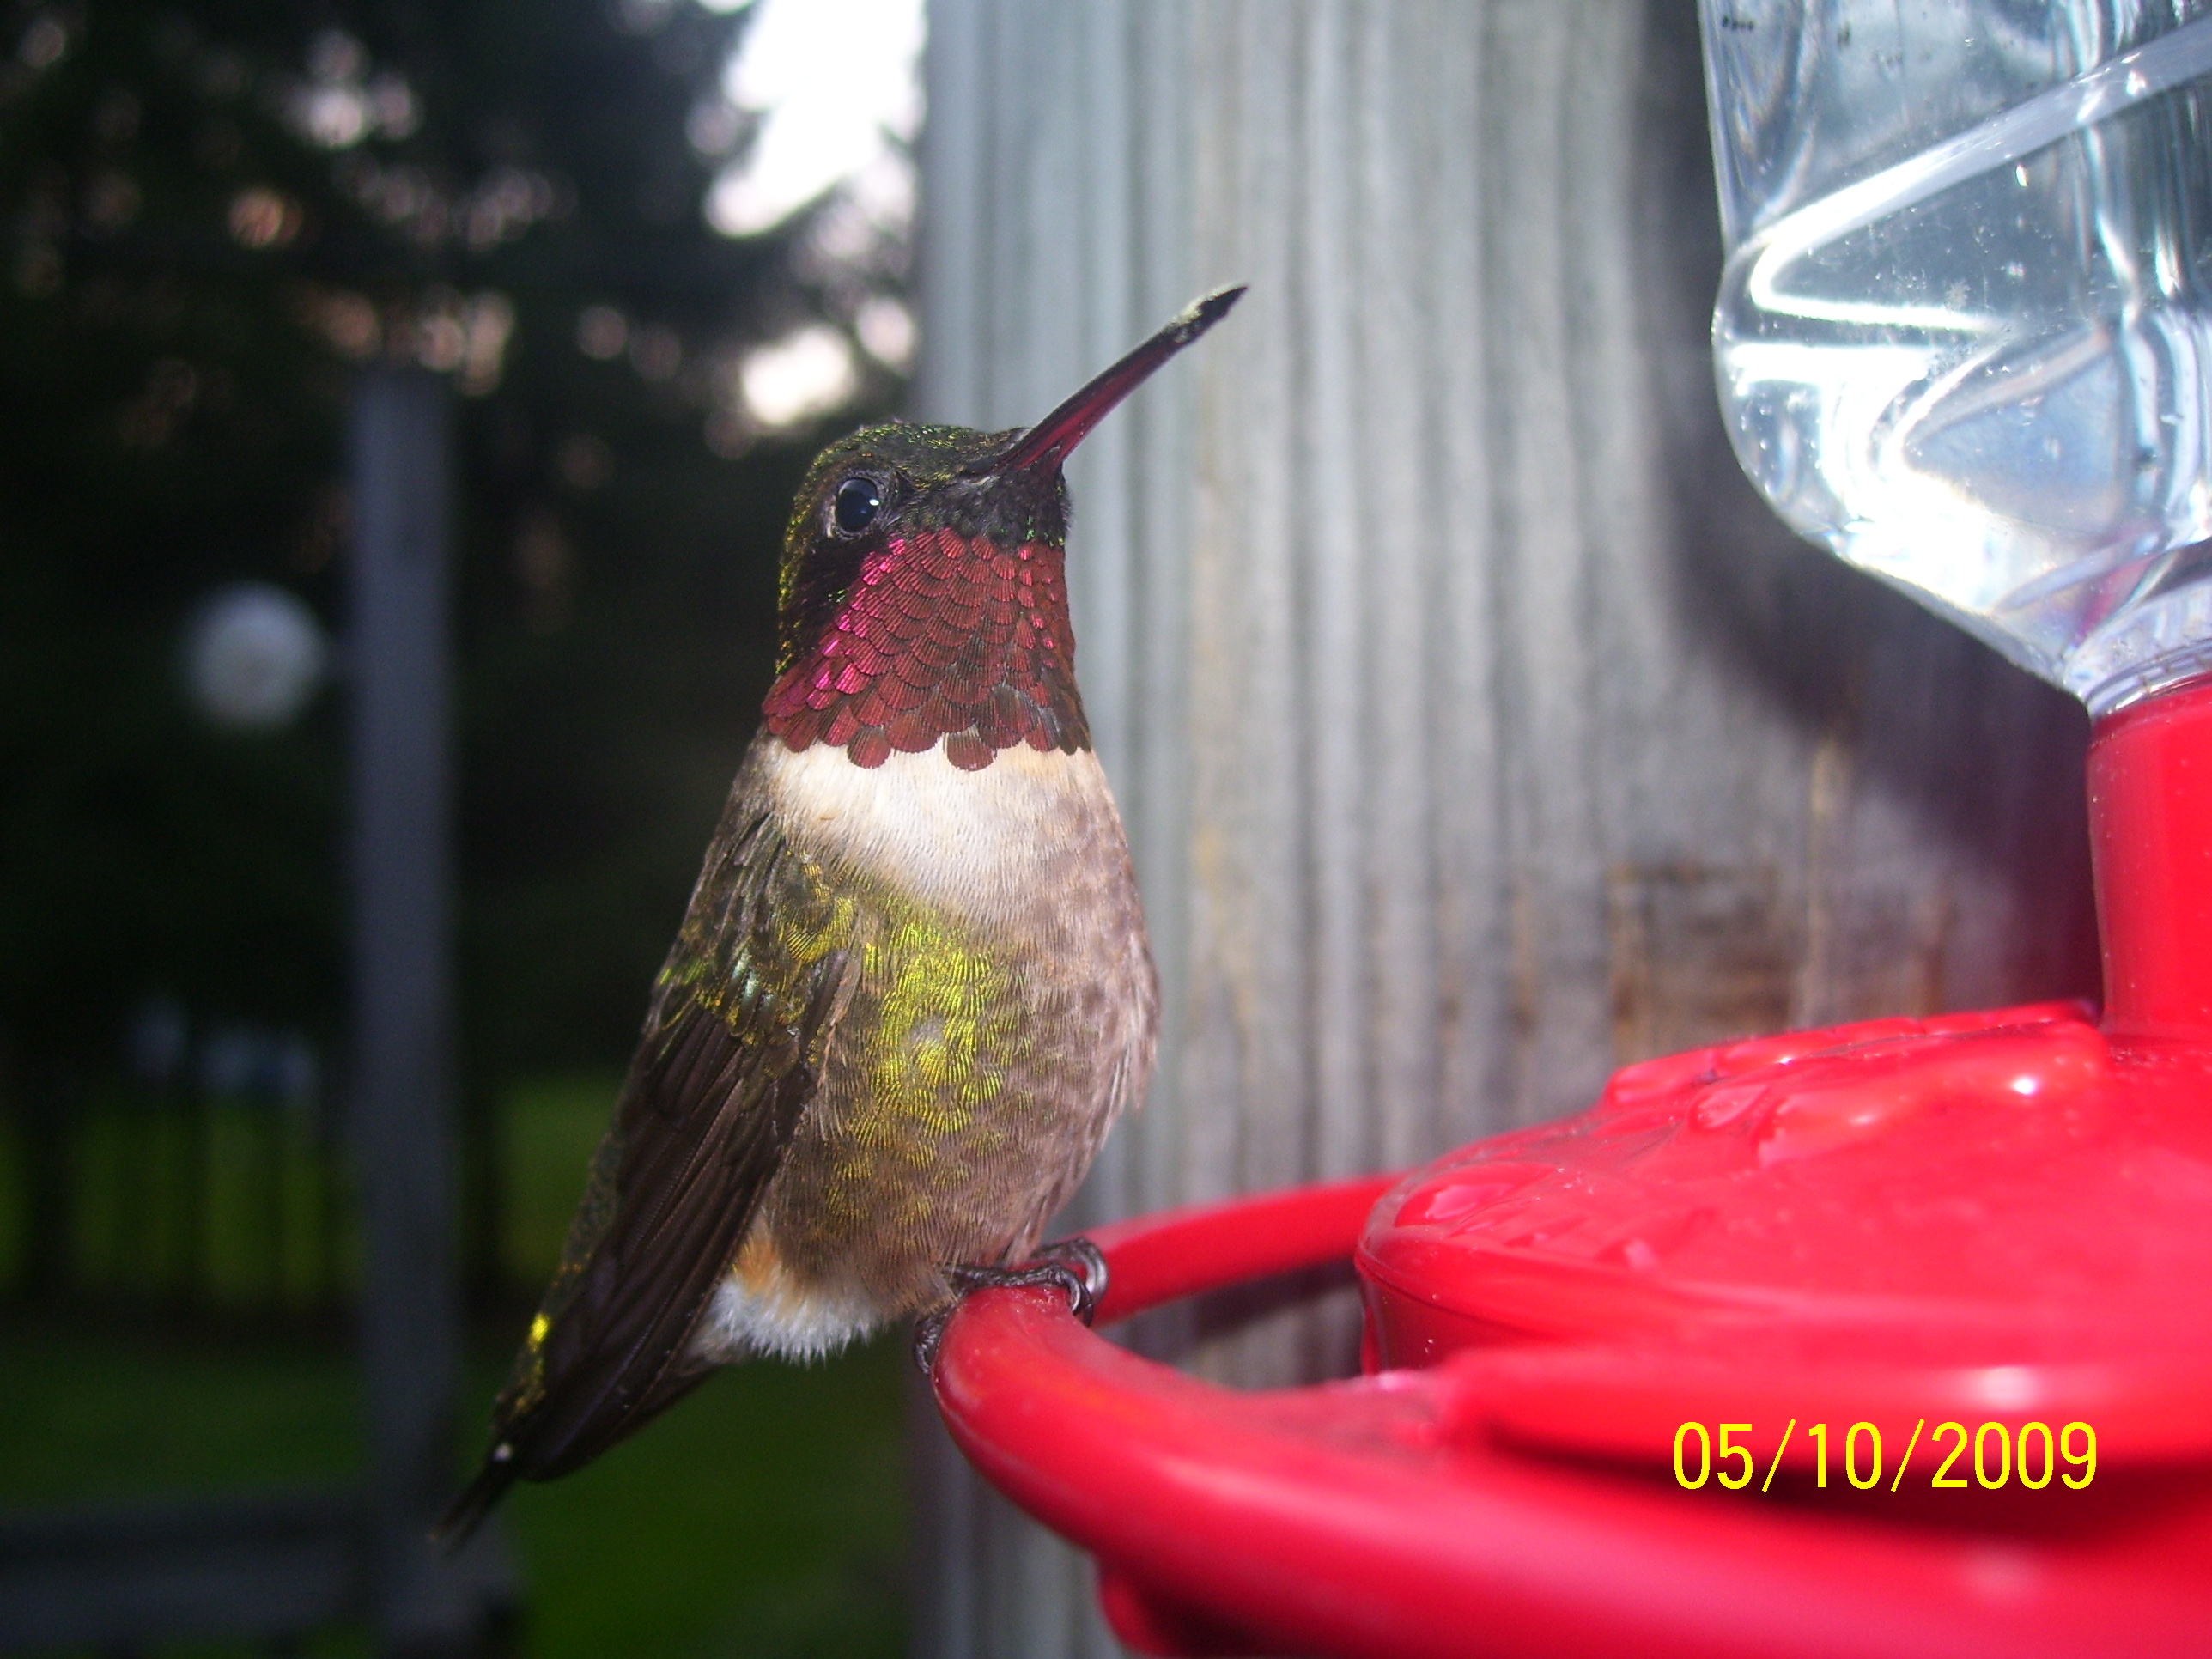 Humdinger of a hummingbird photo